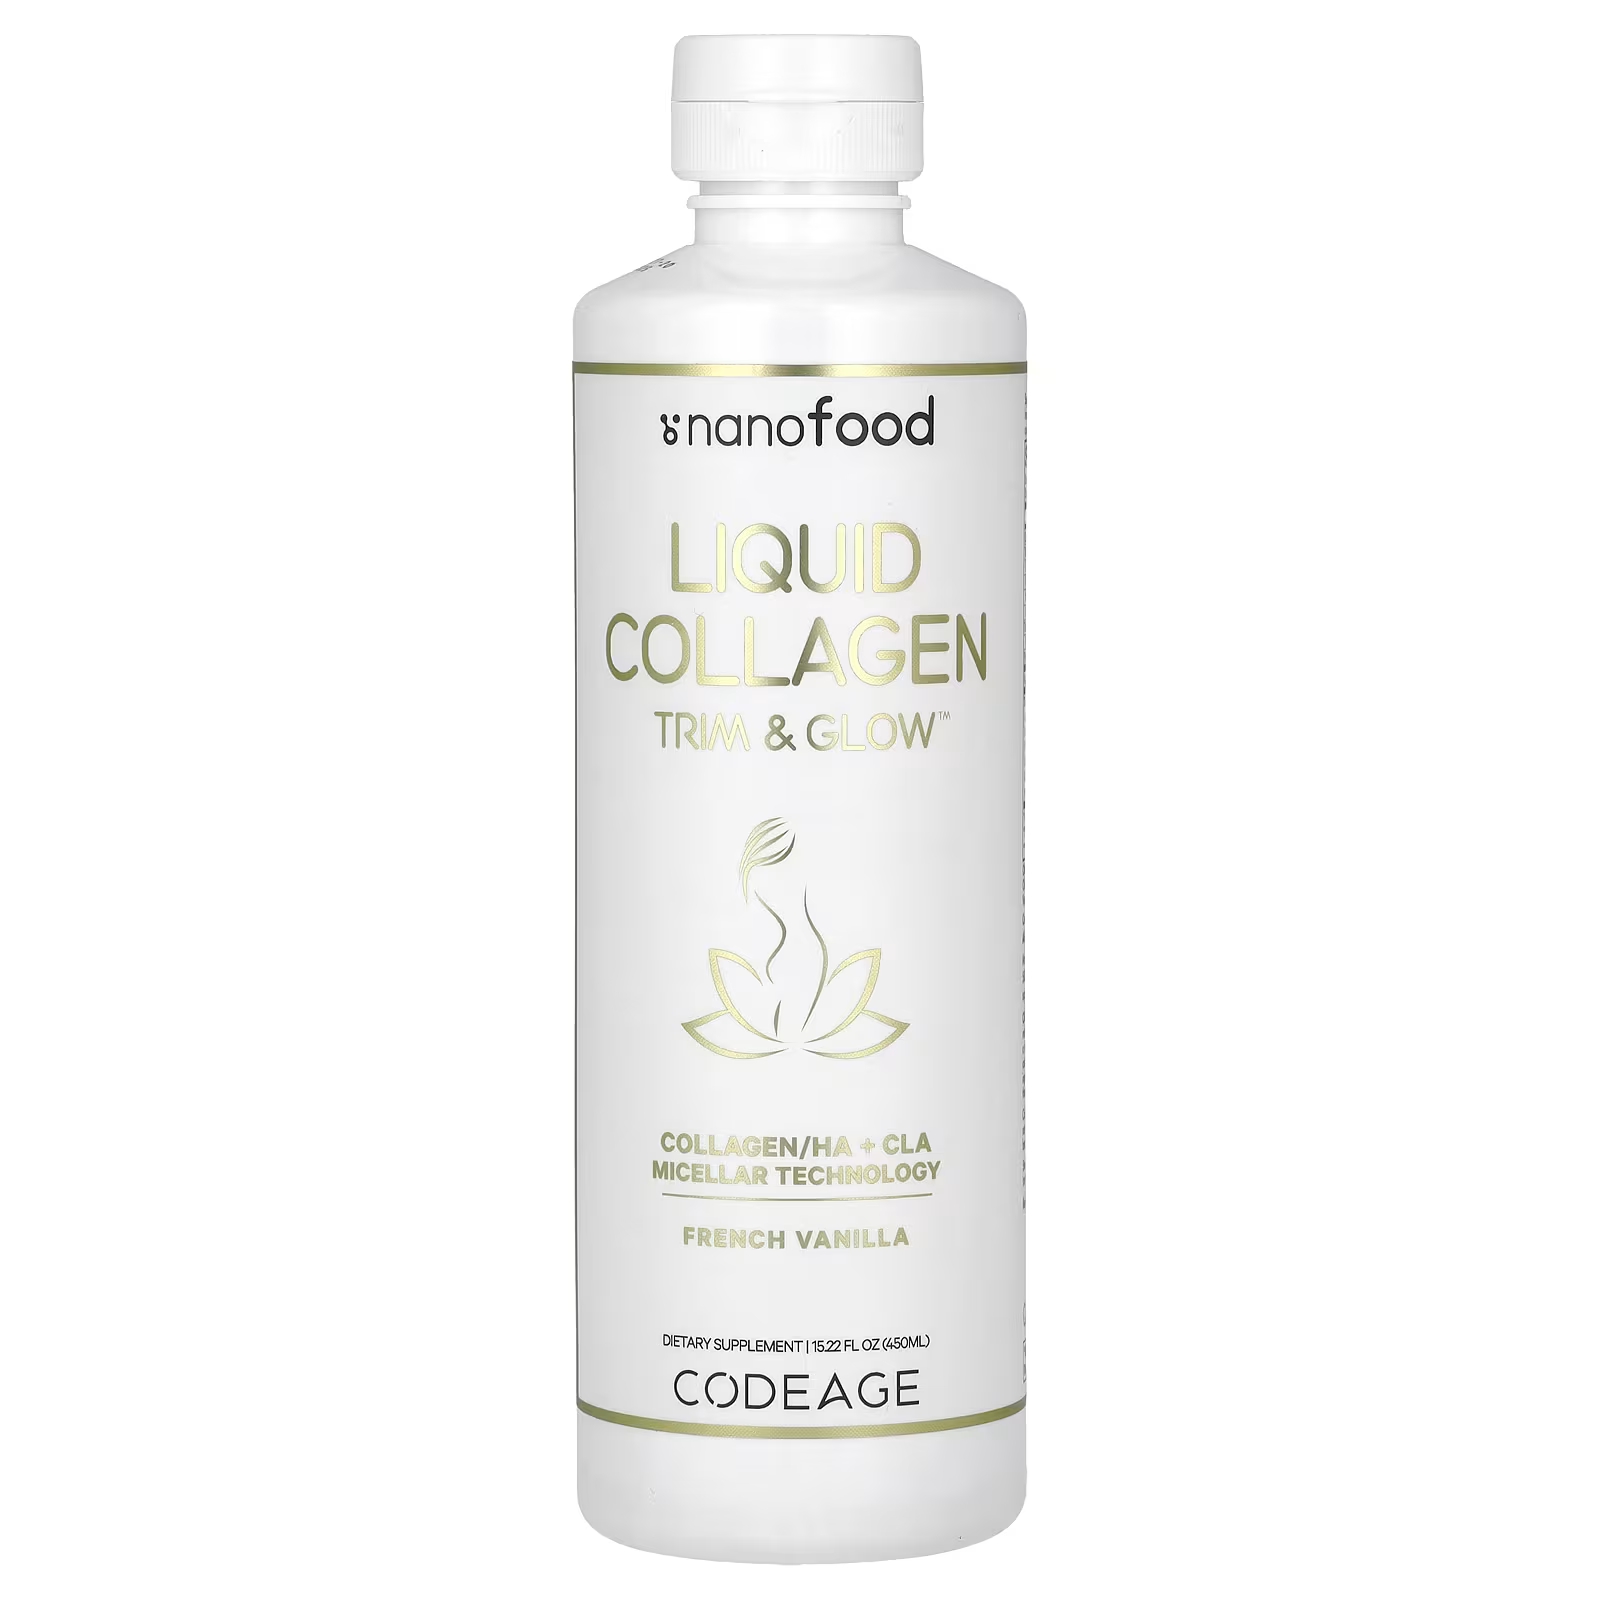 Codeage Nanofood Liquid Collagen Trim & Glow, французская ваниль, 15,22 жидких унции (450 мл)